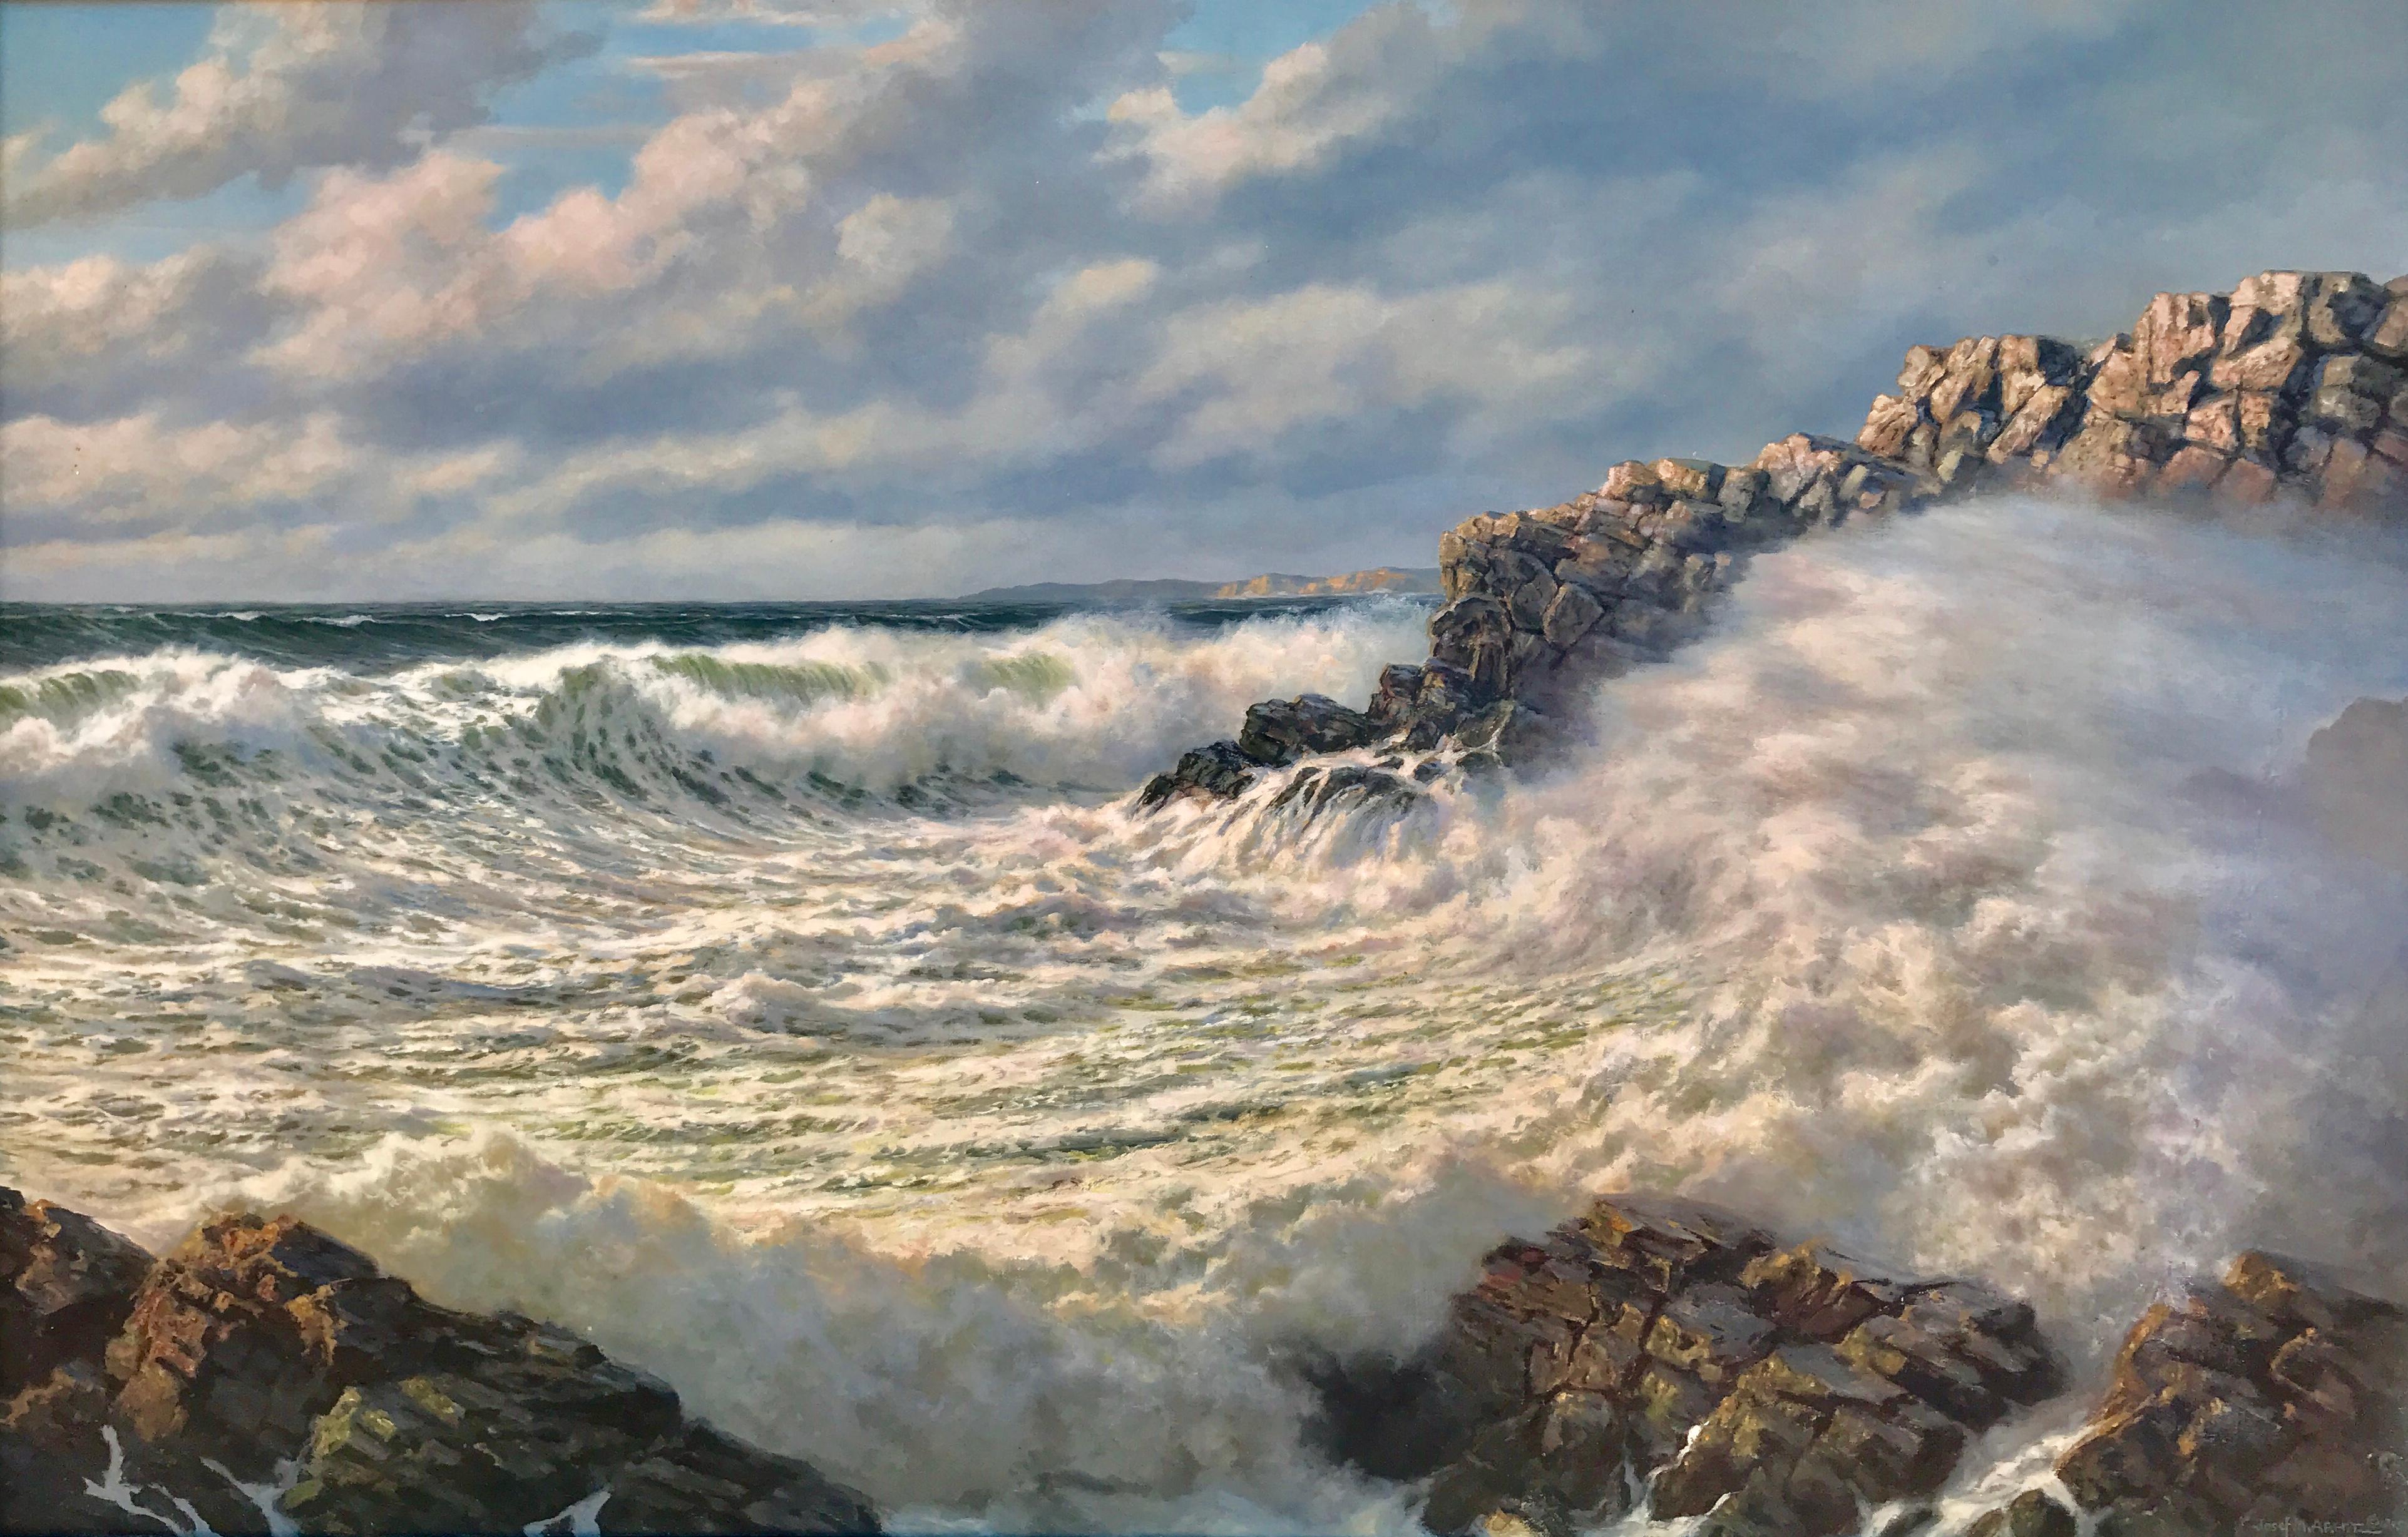 Josef M. Arentz Landscape Painting - “Incoming Surf”